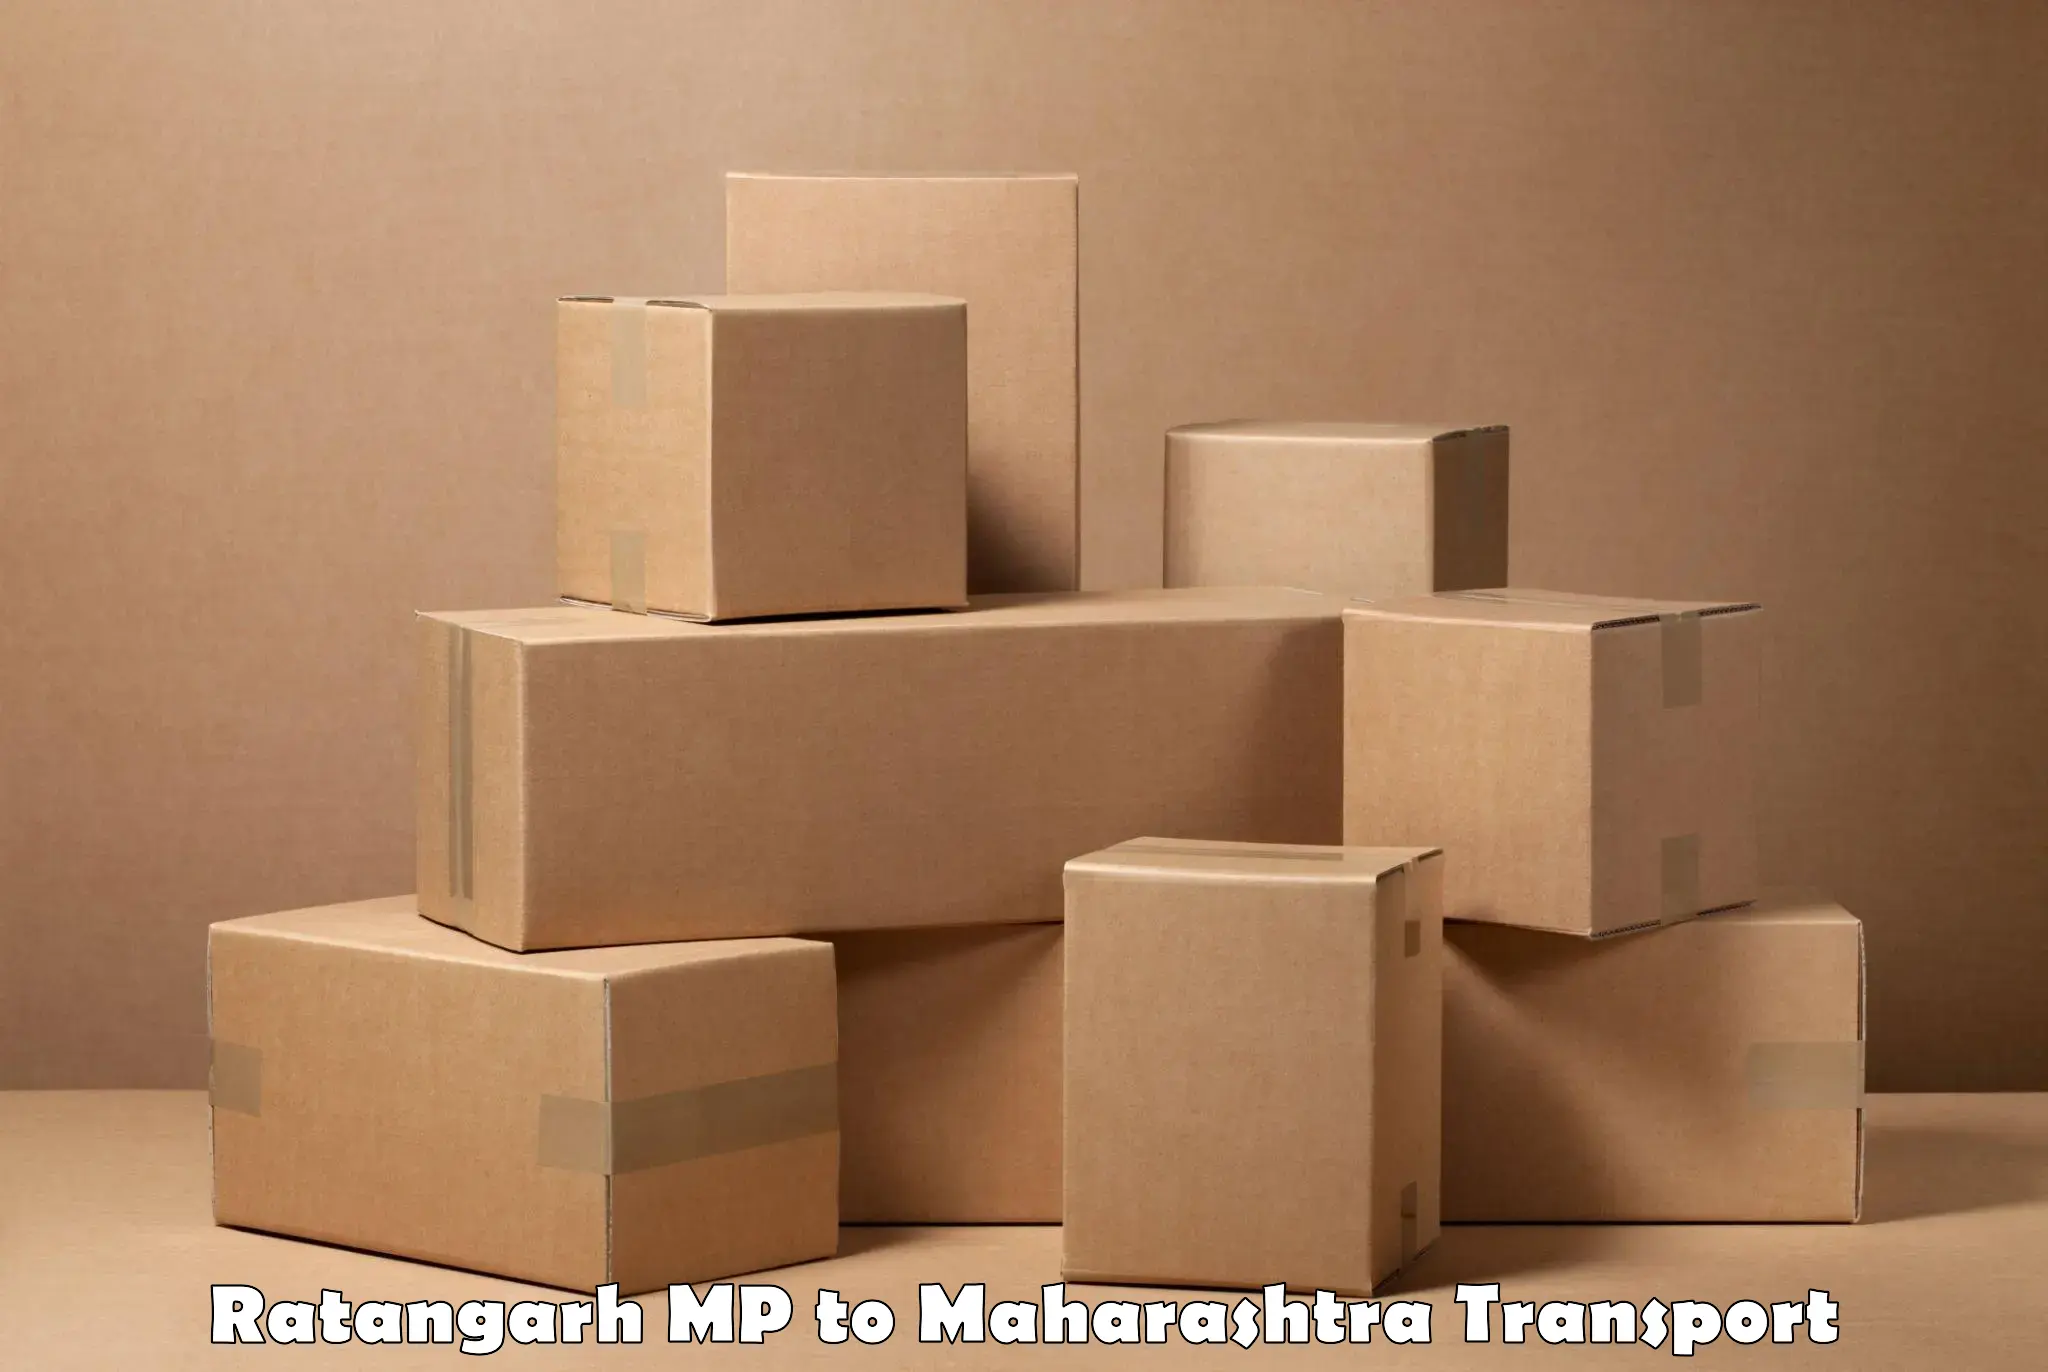 Lorry transport service Ratangarh MP to Thane